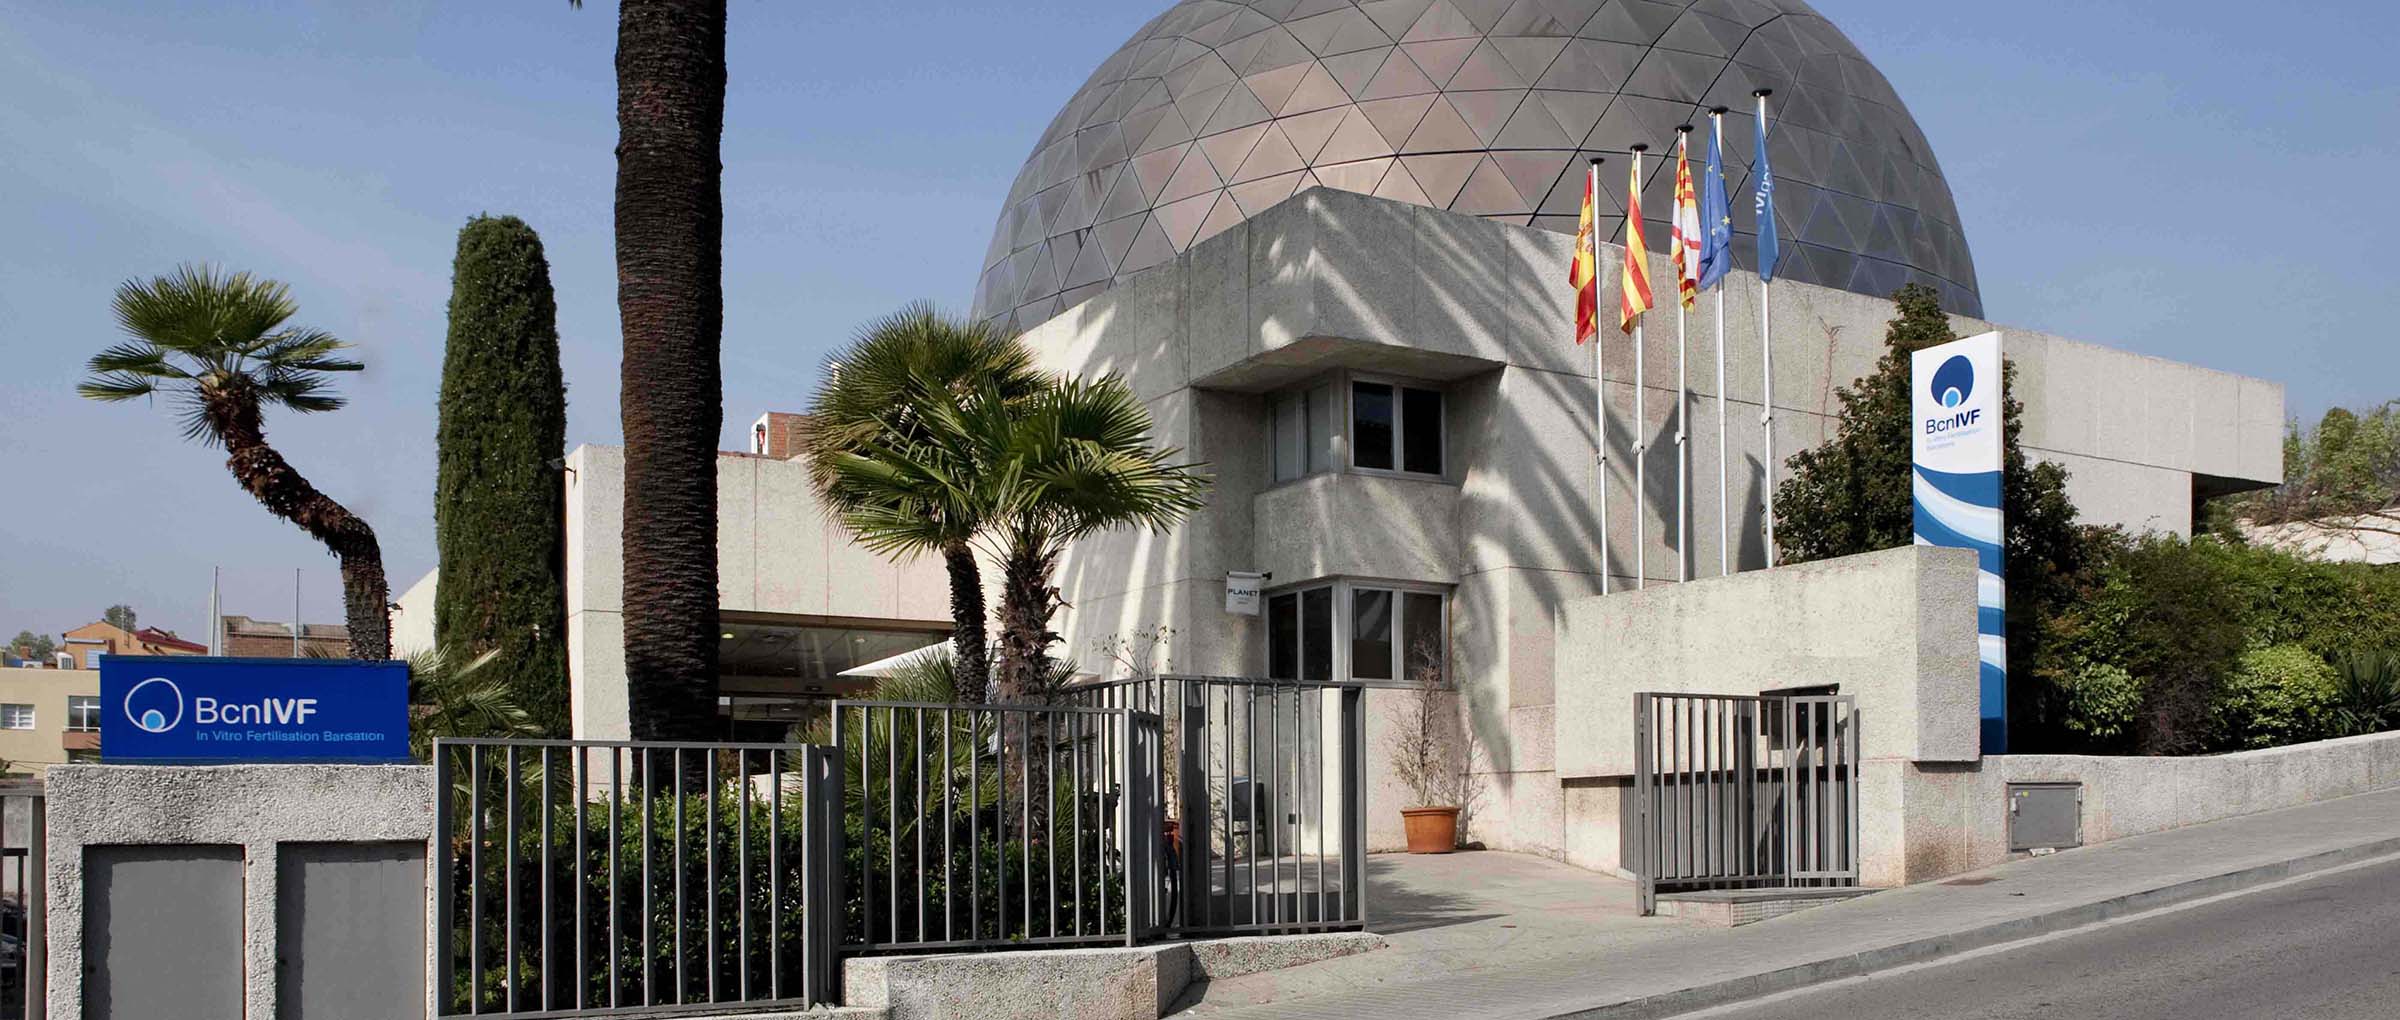 Edifici Planetario Barcelona IVF